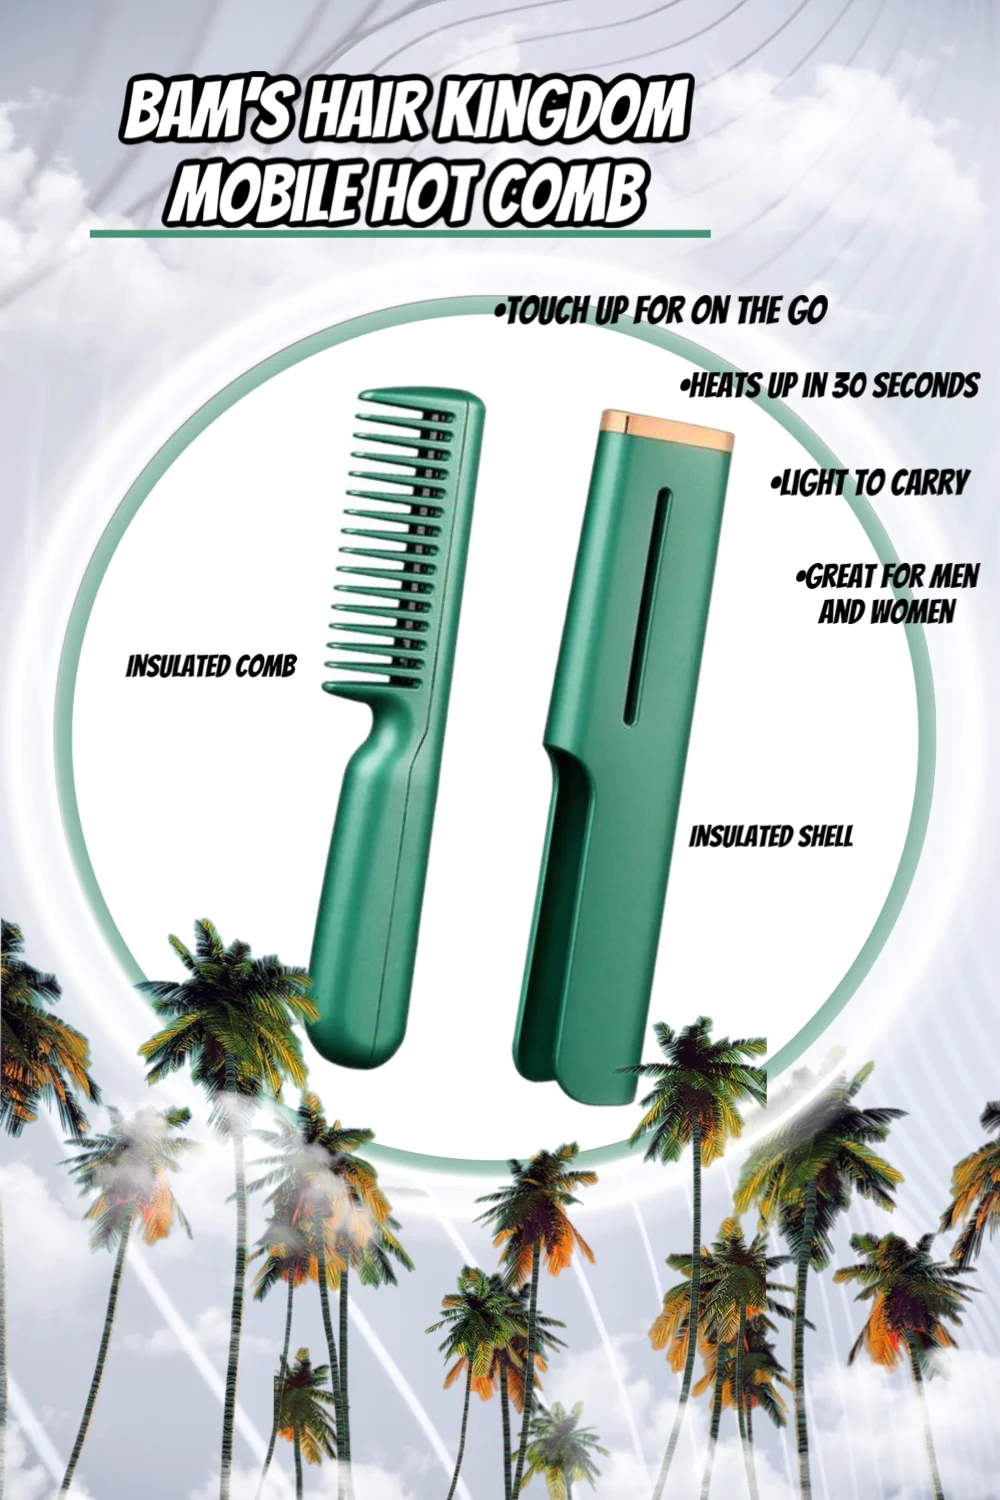 Electric 2 In 1 mobile Straightener Brush Curler Fast Heating Hair Beard Straightening Portable Mini Comb Hair Style ToolBrush